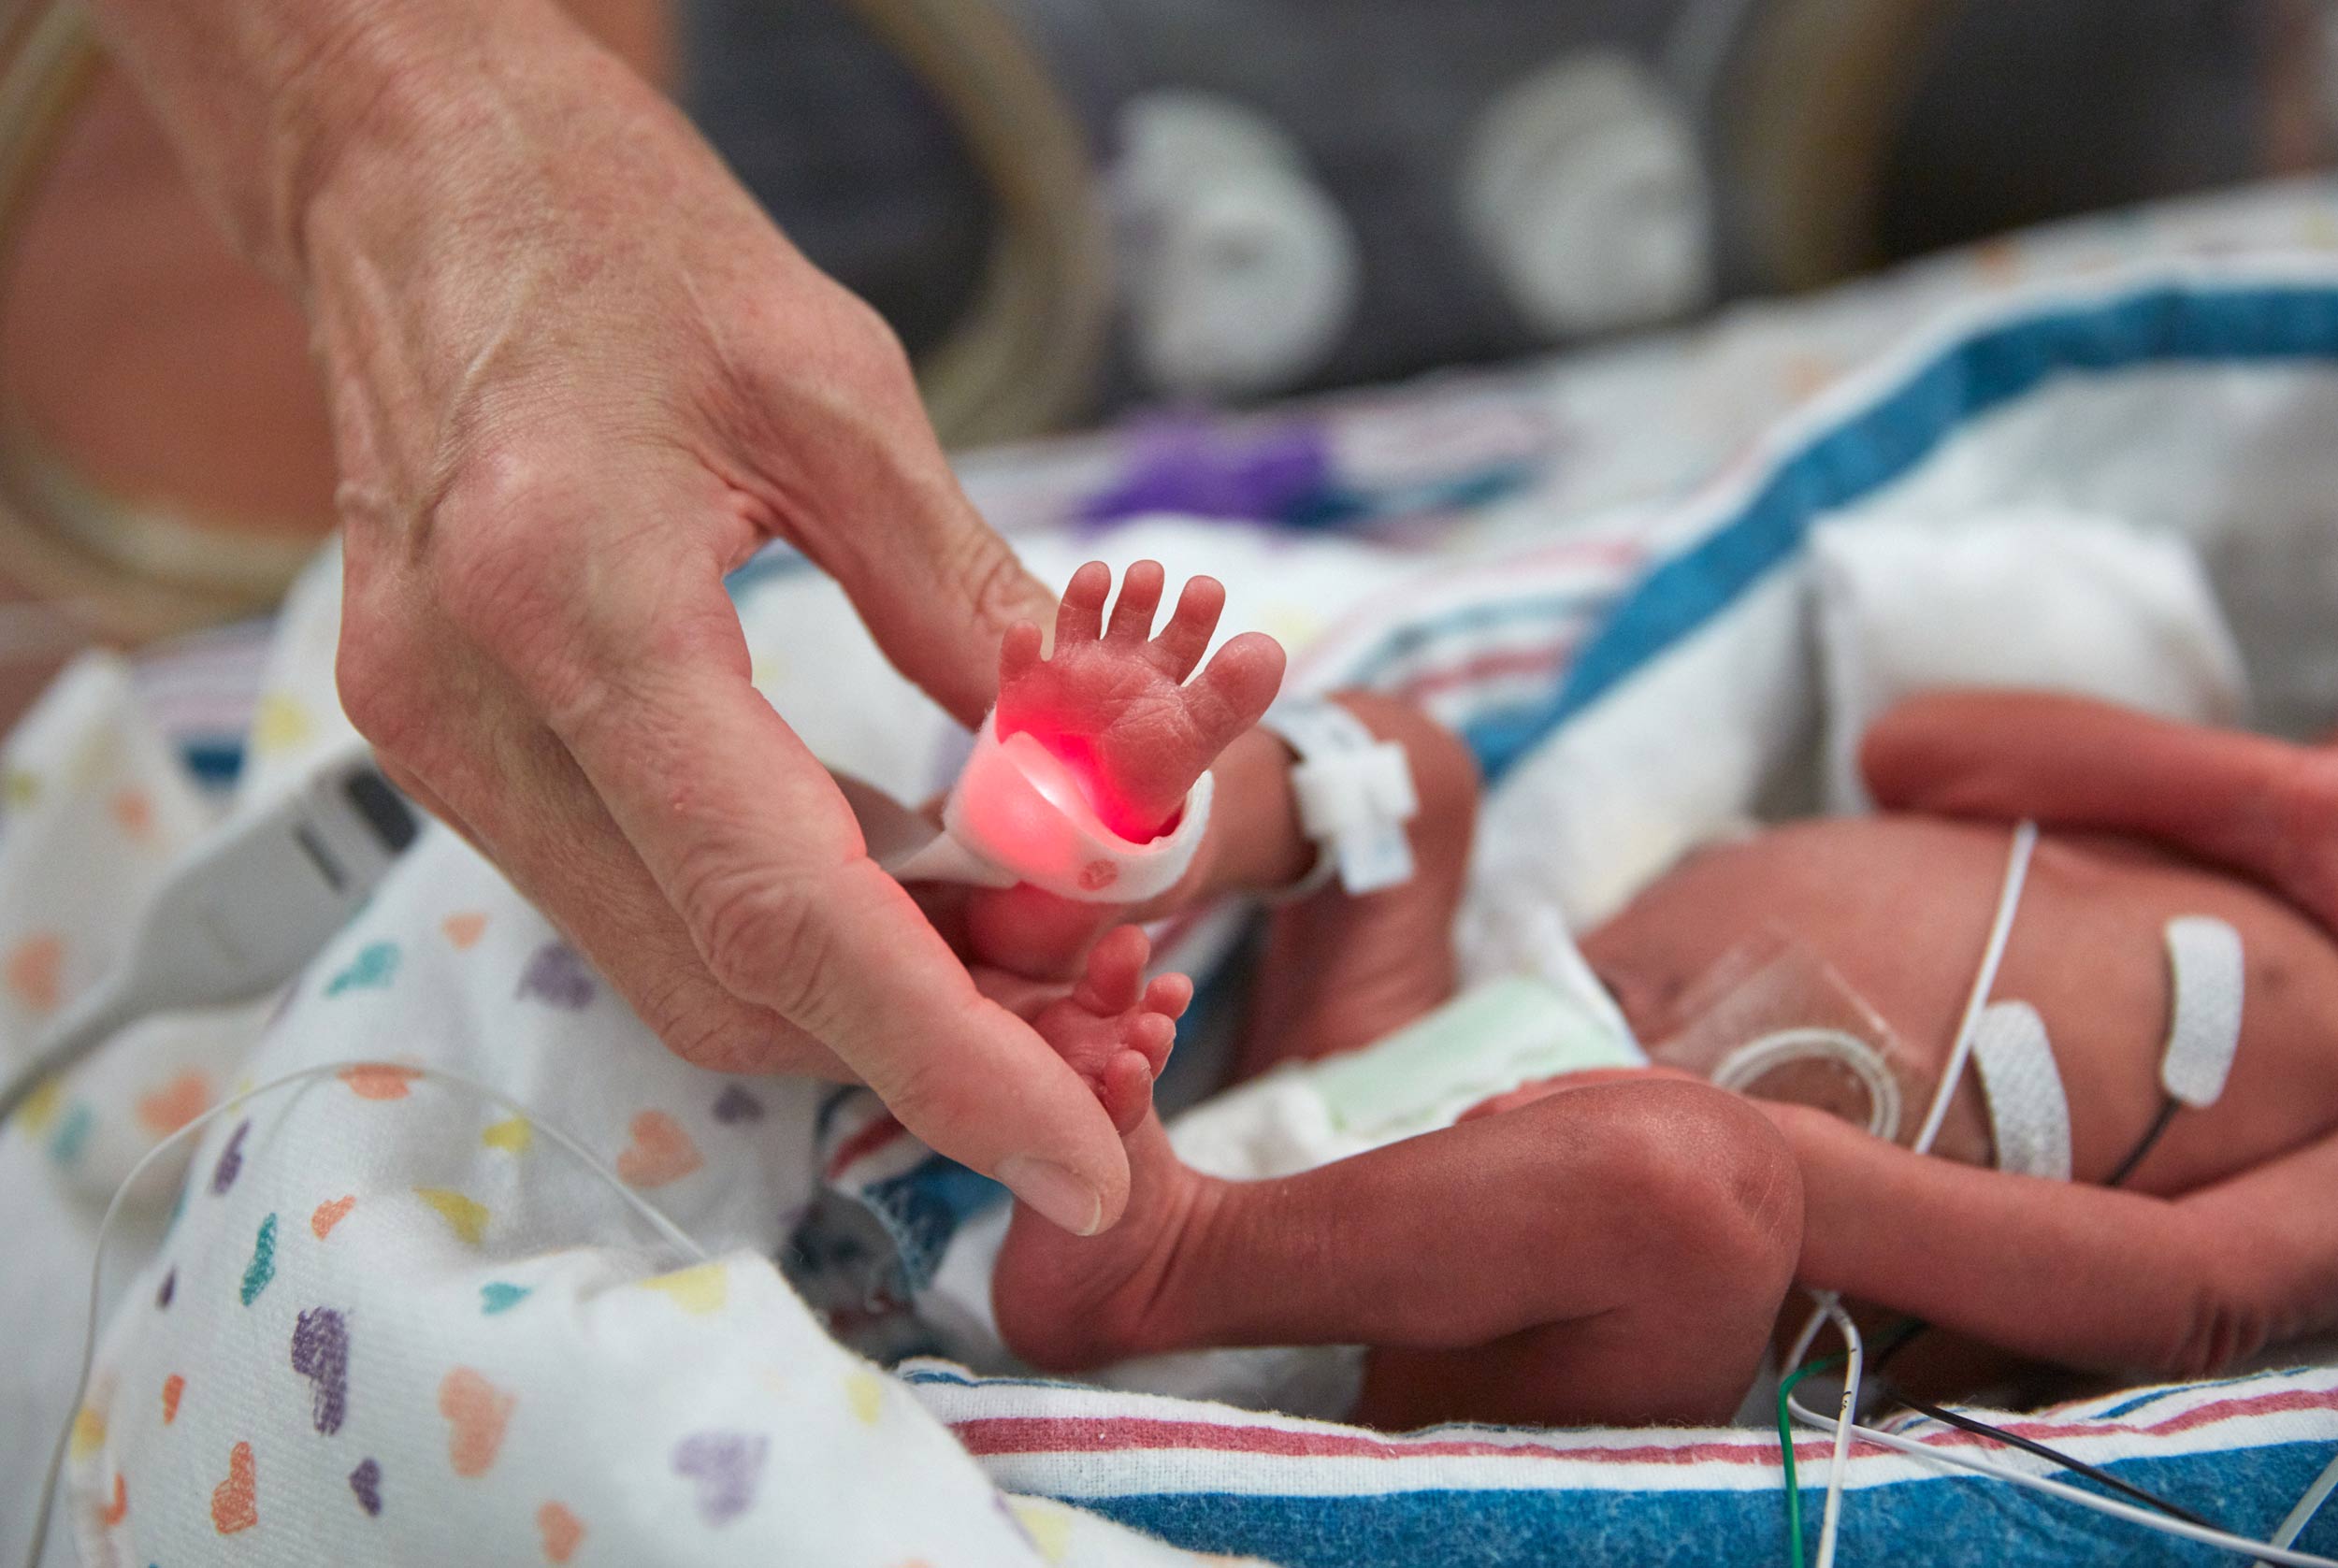 A Nurse Tends to a premature infant in the NICU